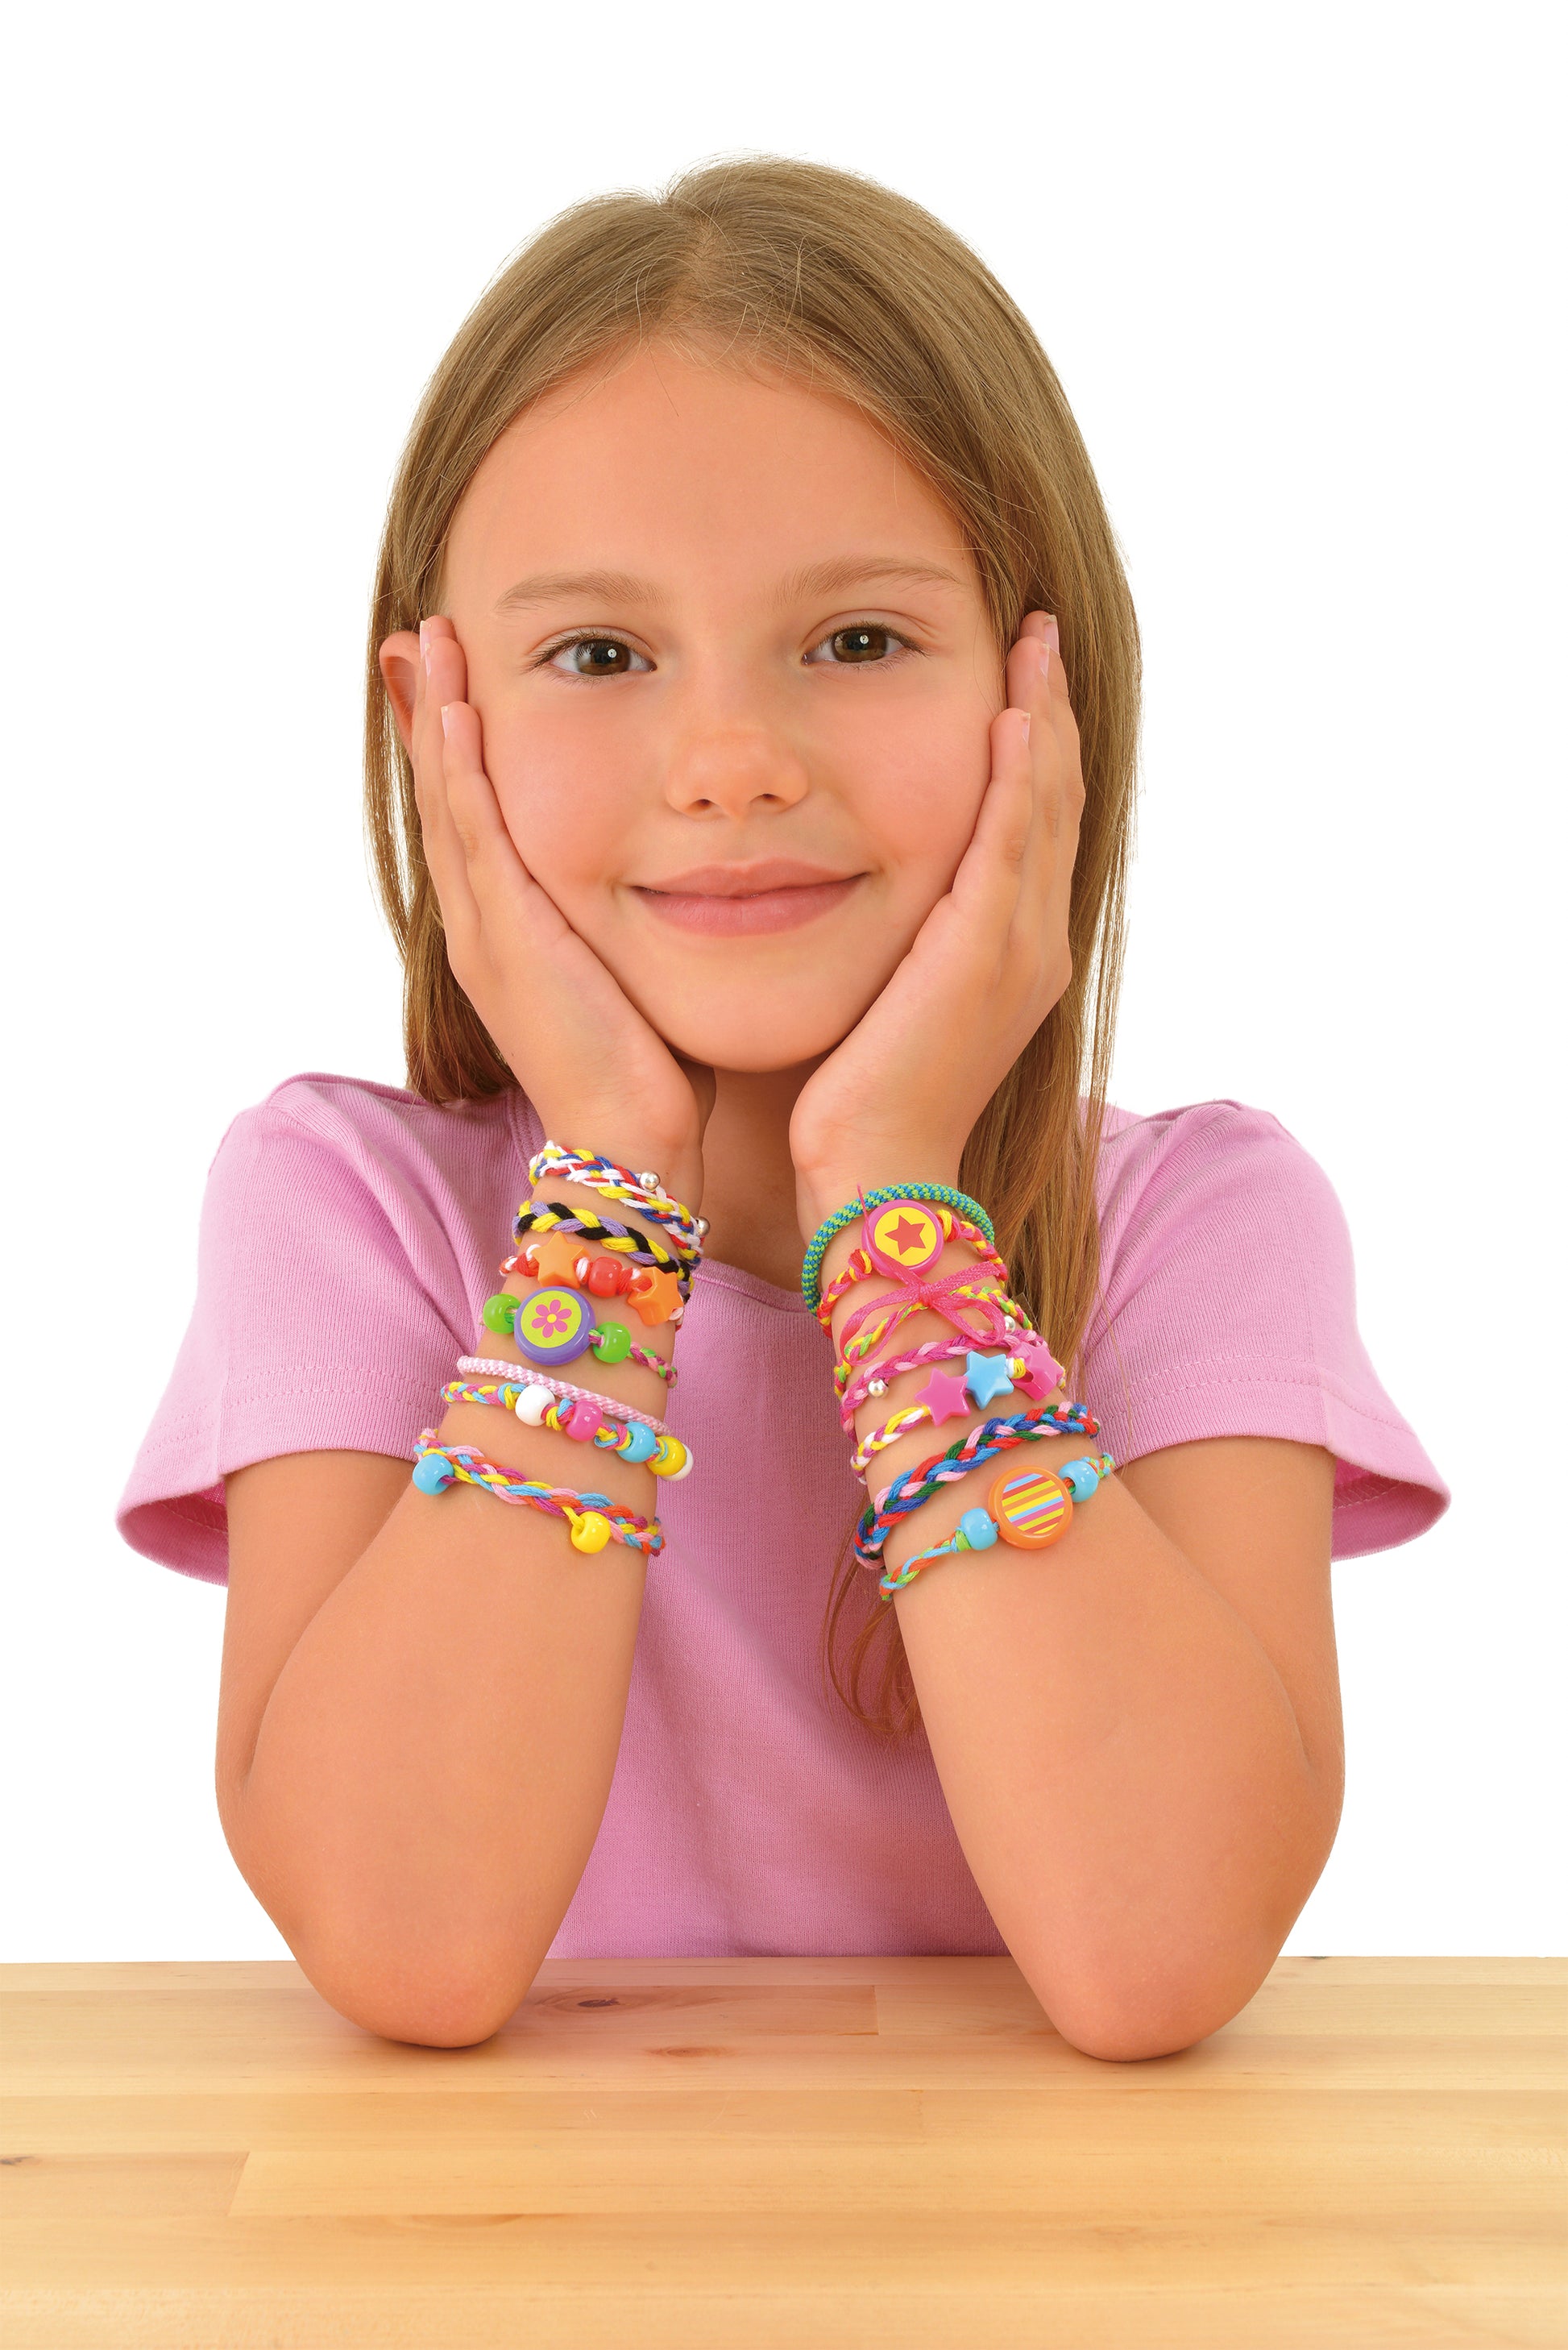 Friendship Bracelets - product image - Jumboplay.com